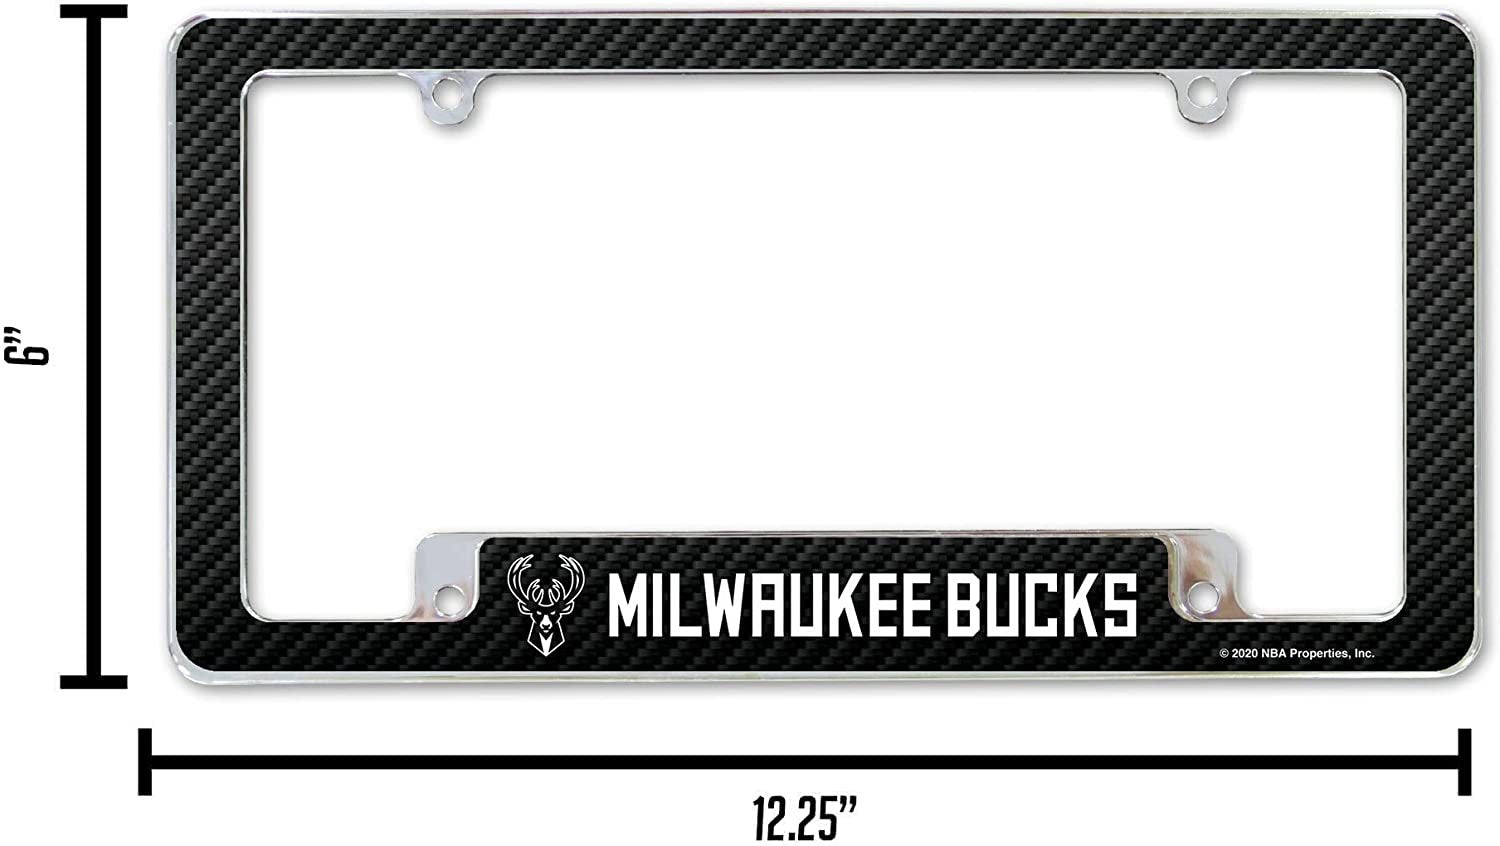 Milwaukee Bucks Metal License Plate Frame Chrome Tag Cover Carbon Fiber Design 6x12 Inch